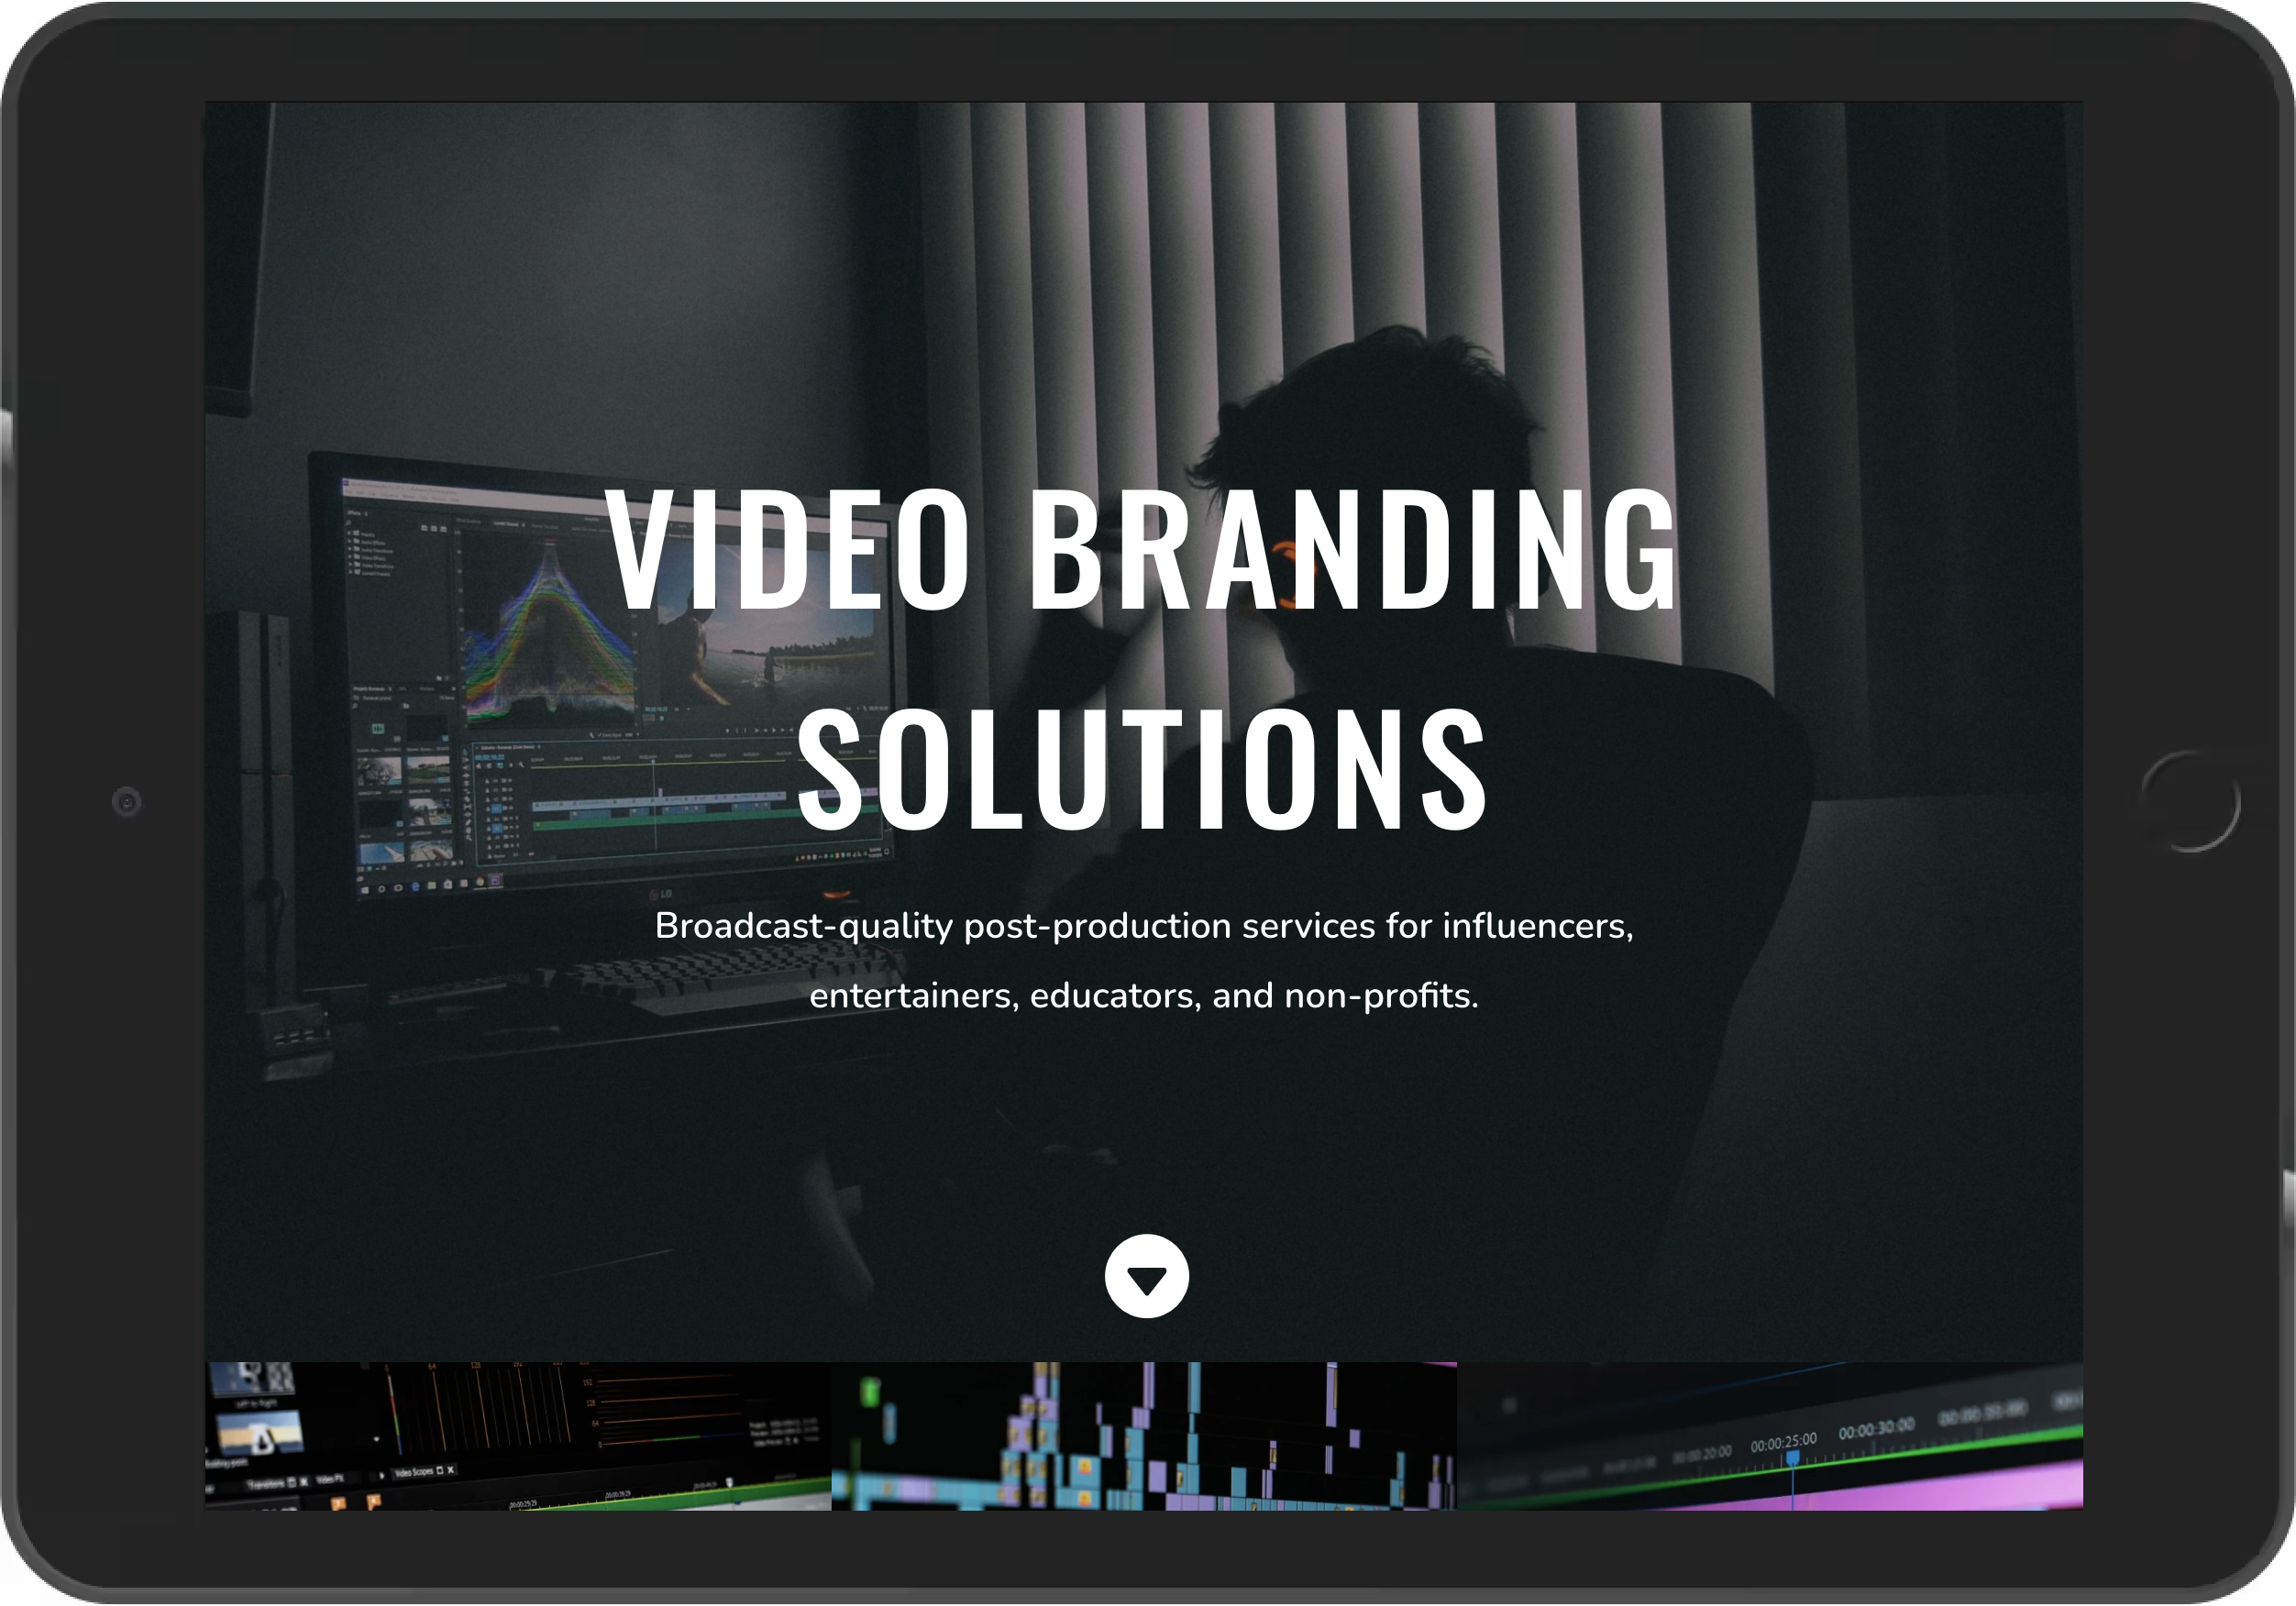 Video Editing Agency